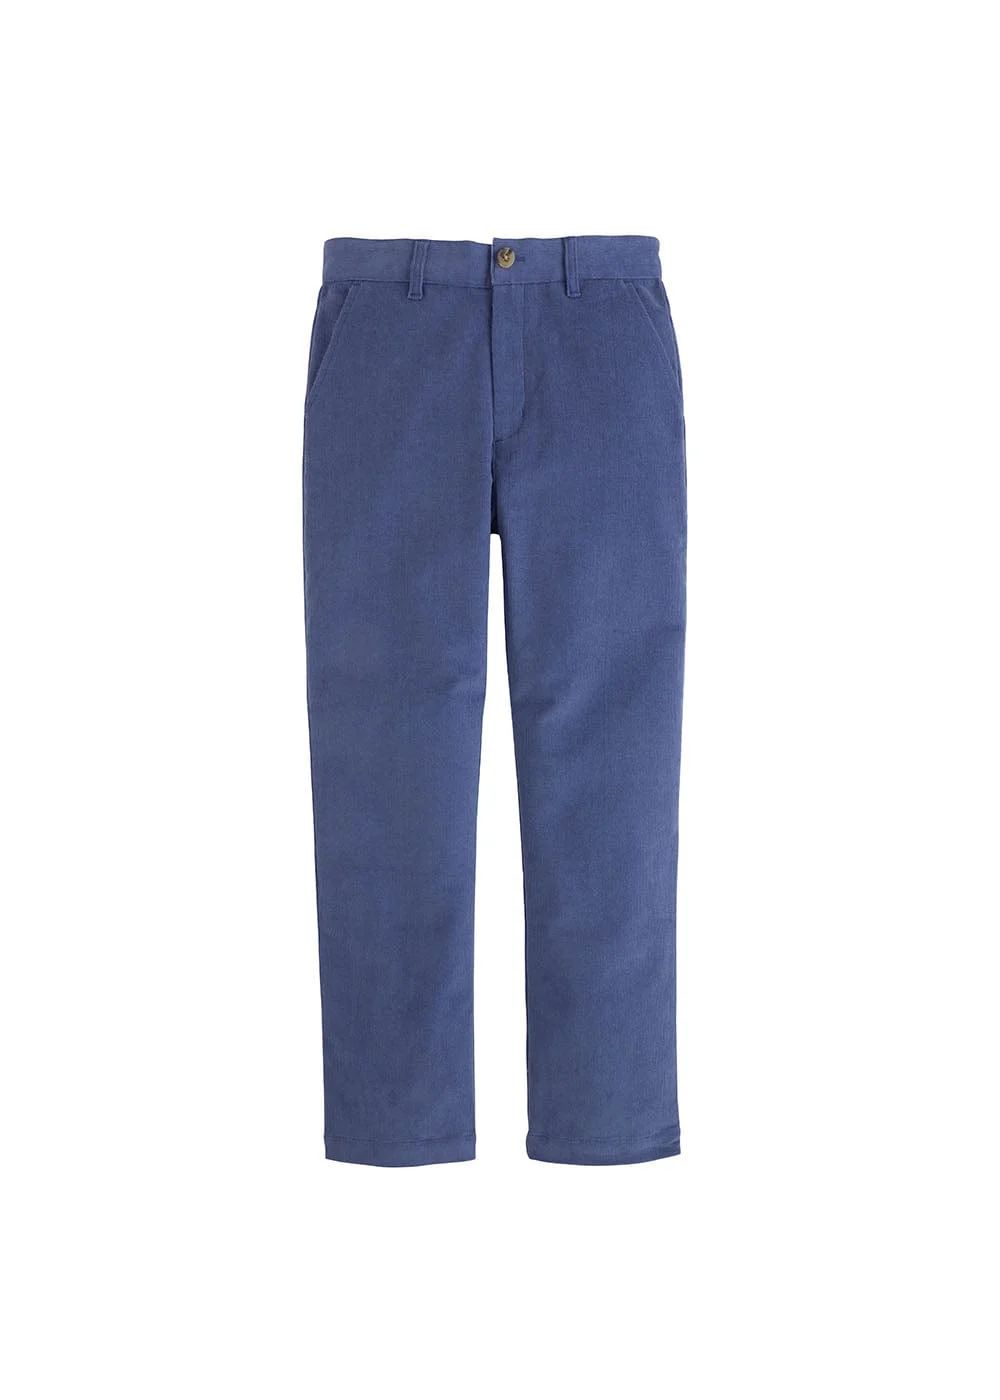 Classic Pant - Gray Blue Corduroy | Little English